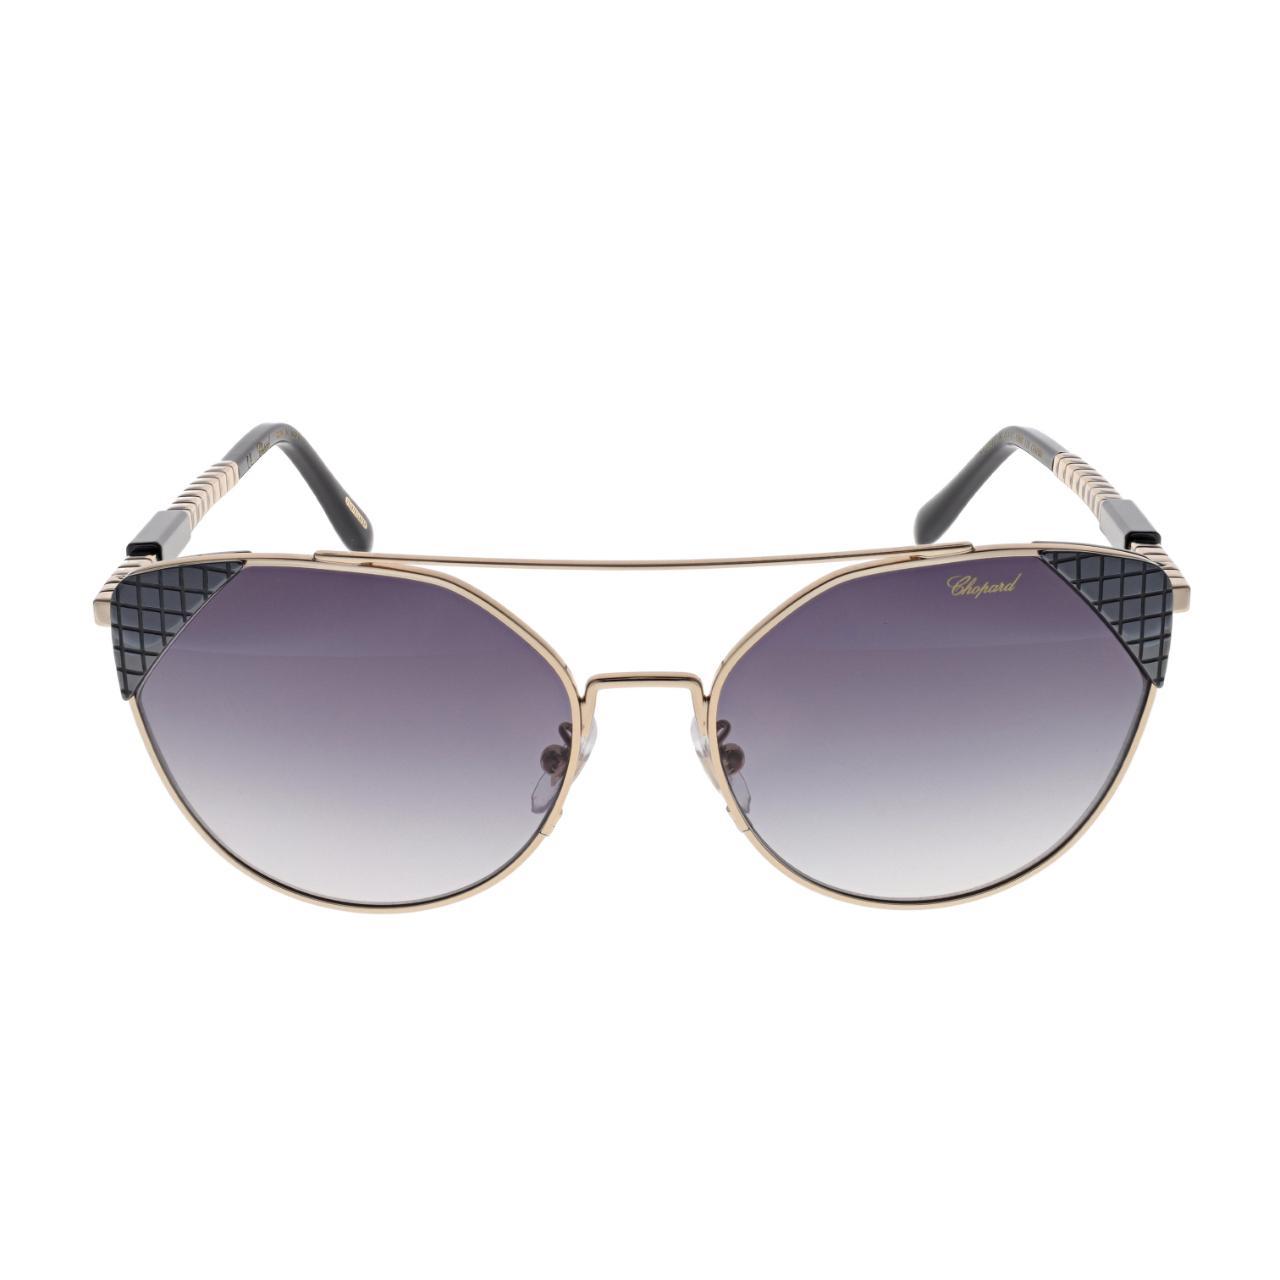 Chopard Women's Gold and Black Sunglasses (2)